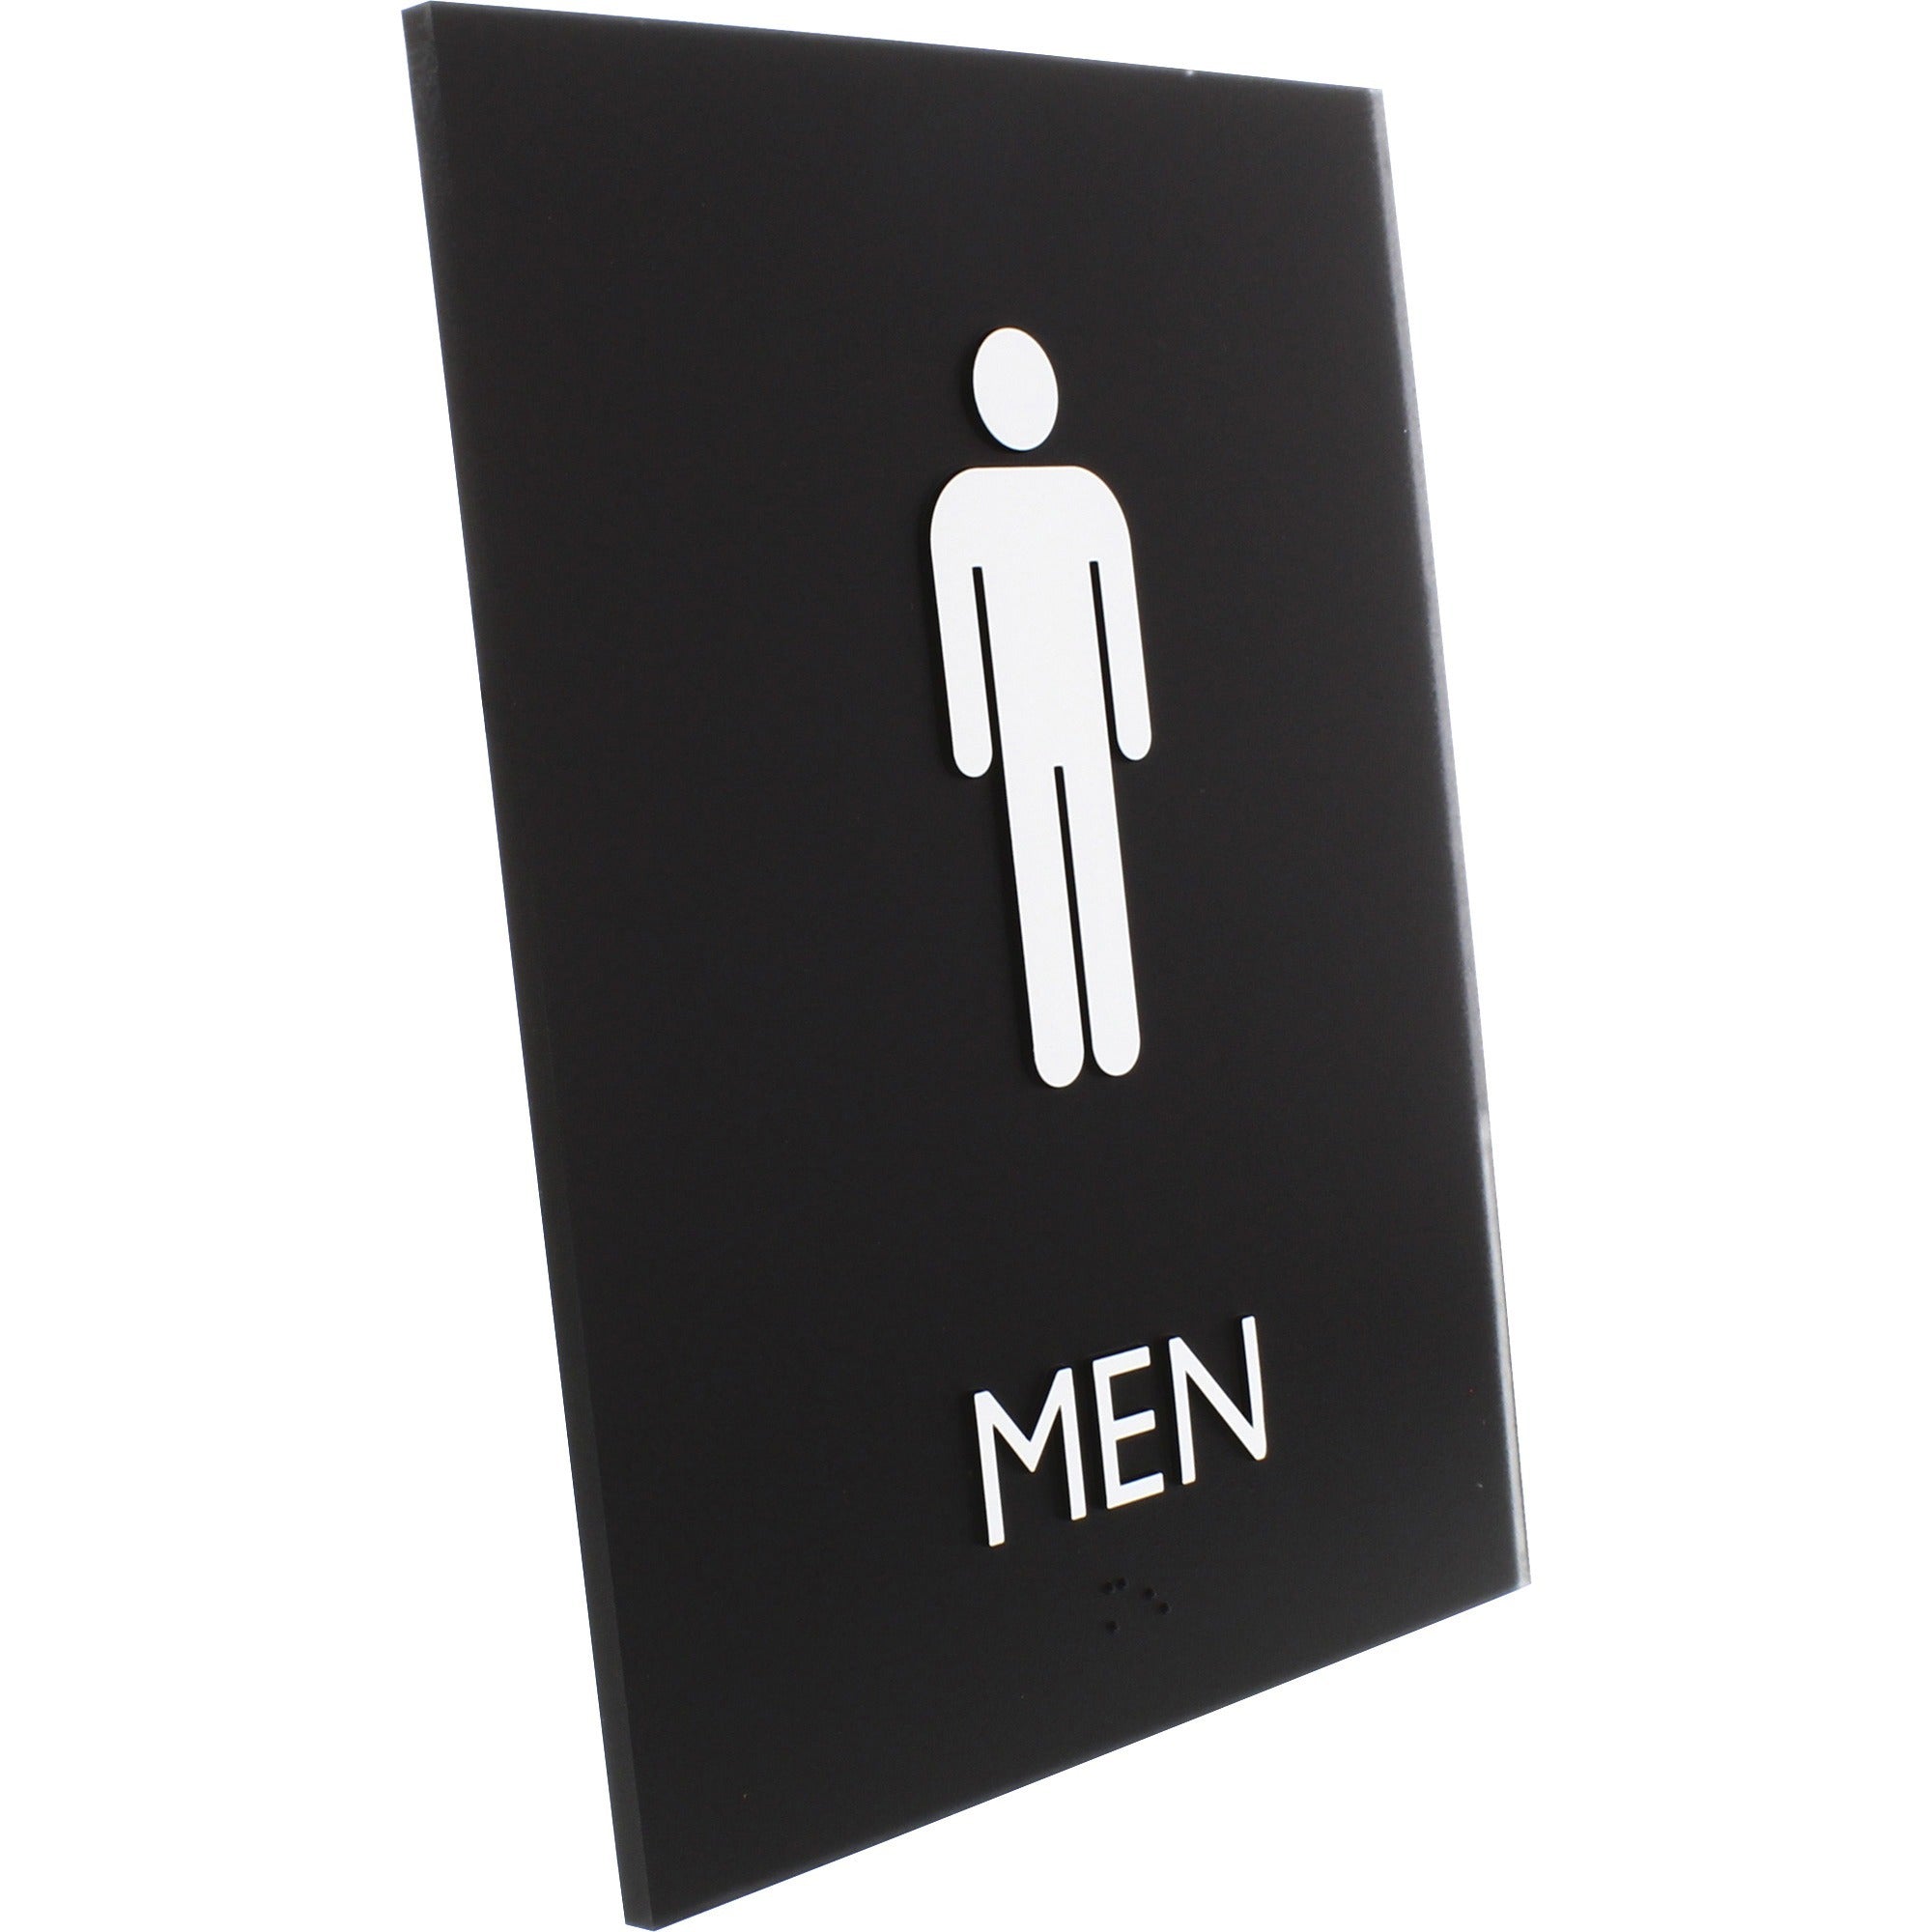 lorell-mens-restroom-sign-1-each-men-print-message-64-width-x-85-height-rectangular-shape-surface-mountable-easy-readability-braille-plastic-black_llr02667 - 3